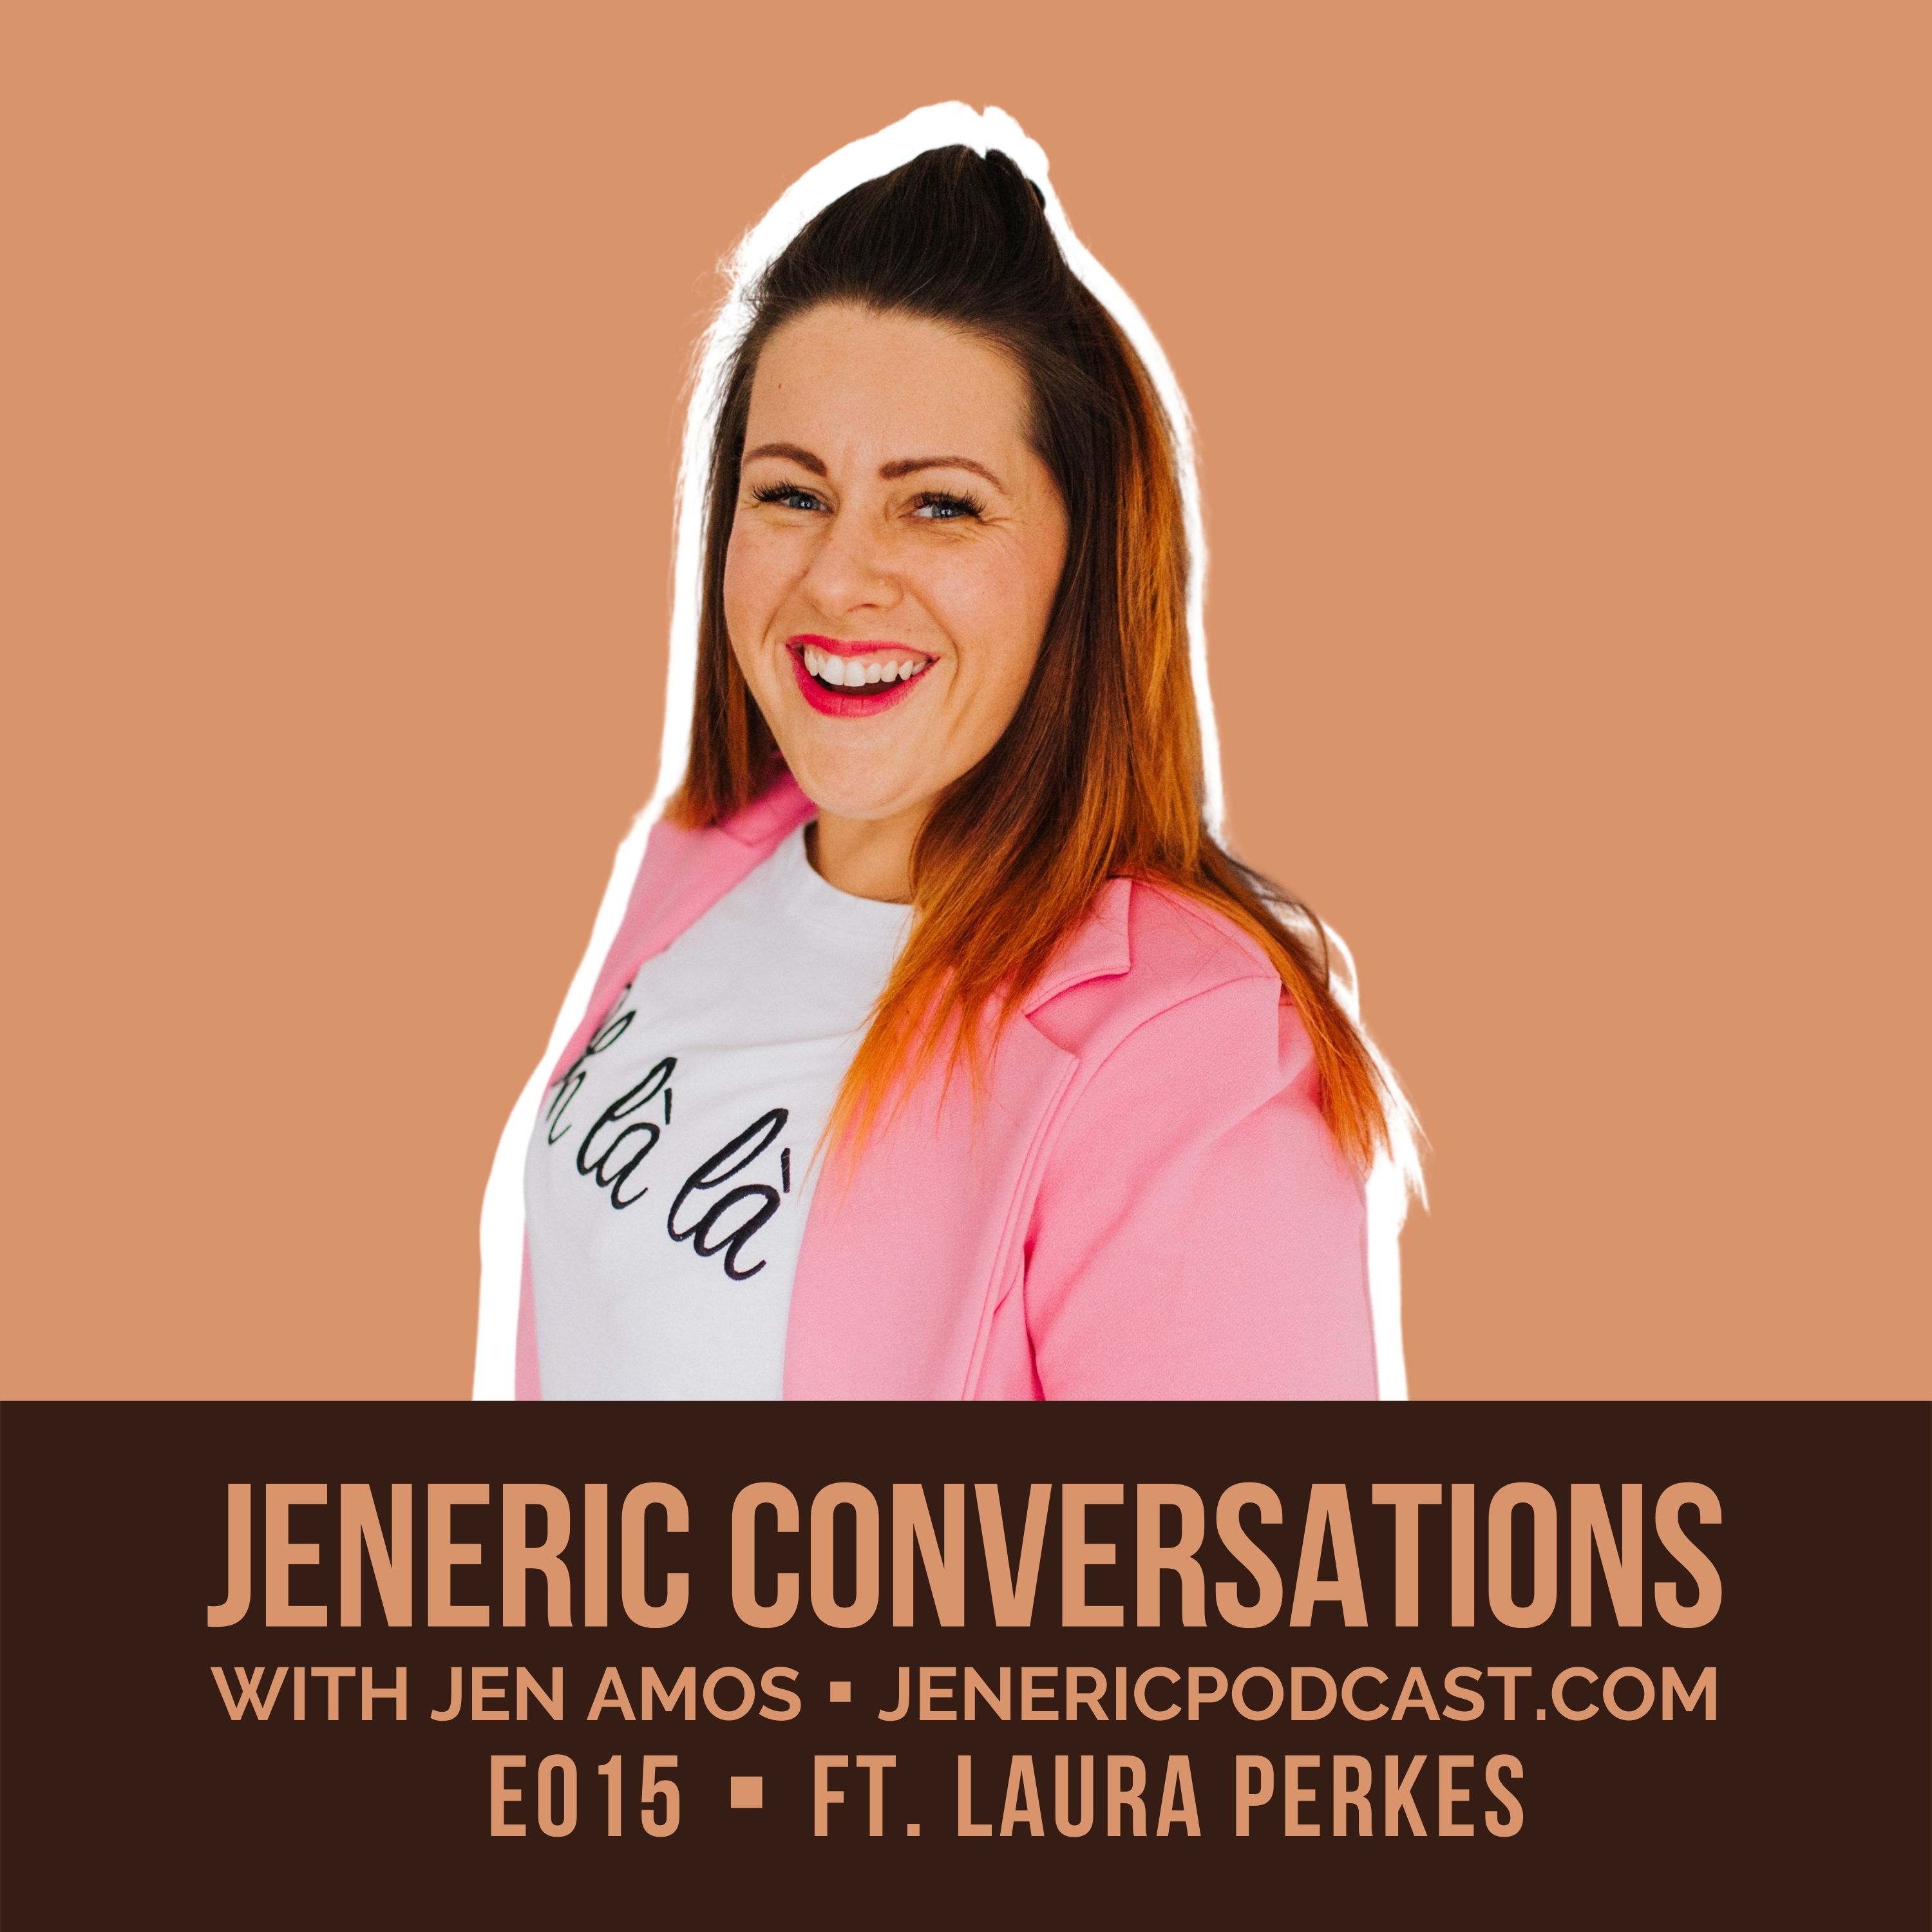 Artwork for podcast Jeneric Conversations